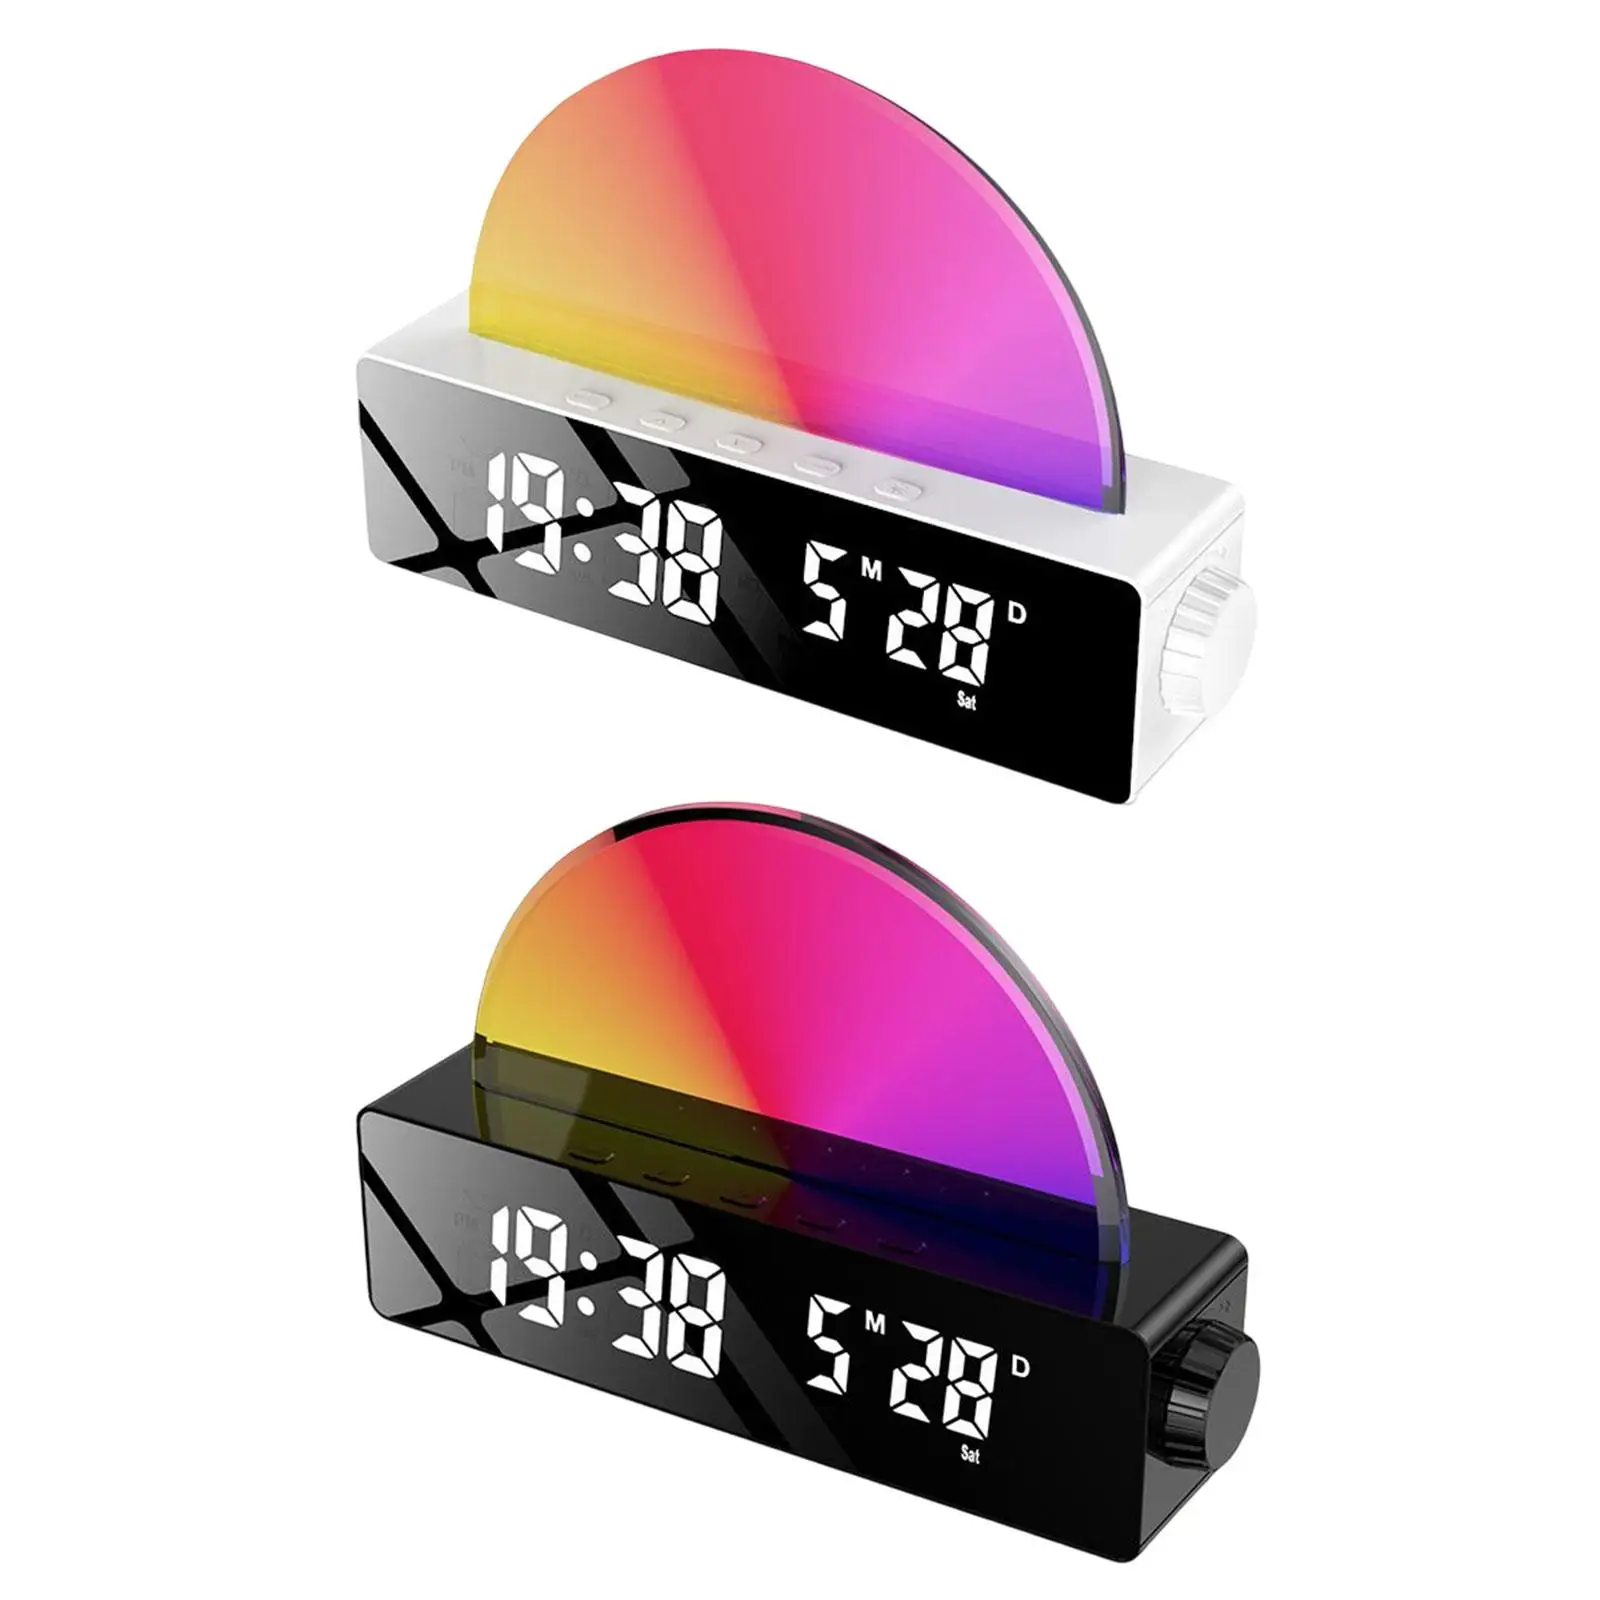 Multifunctional Digital Alarm Clock Large Display Temperature Meter Adjustable RGB Calendar Desktop Clock for Office Kitchen